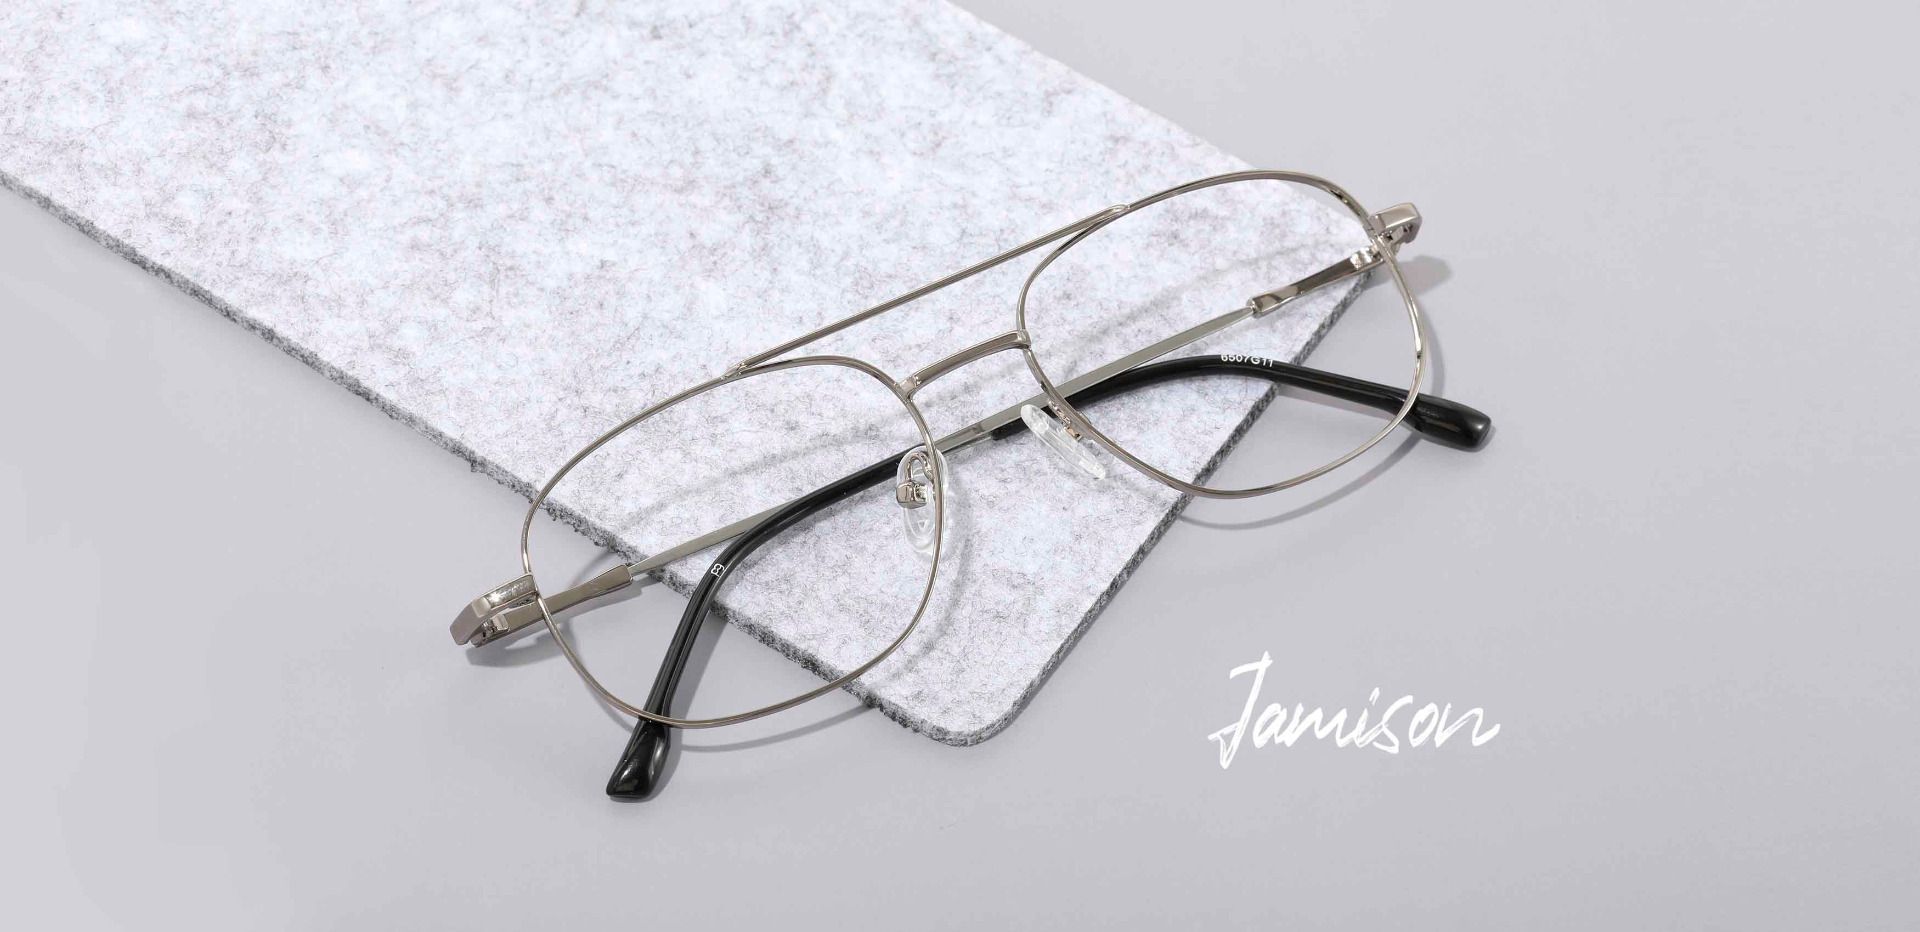 Jamison Aviator Progressive Glasses - Gray